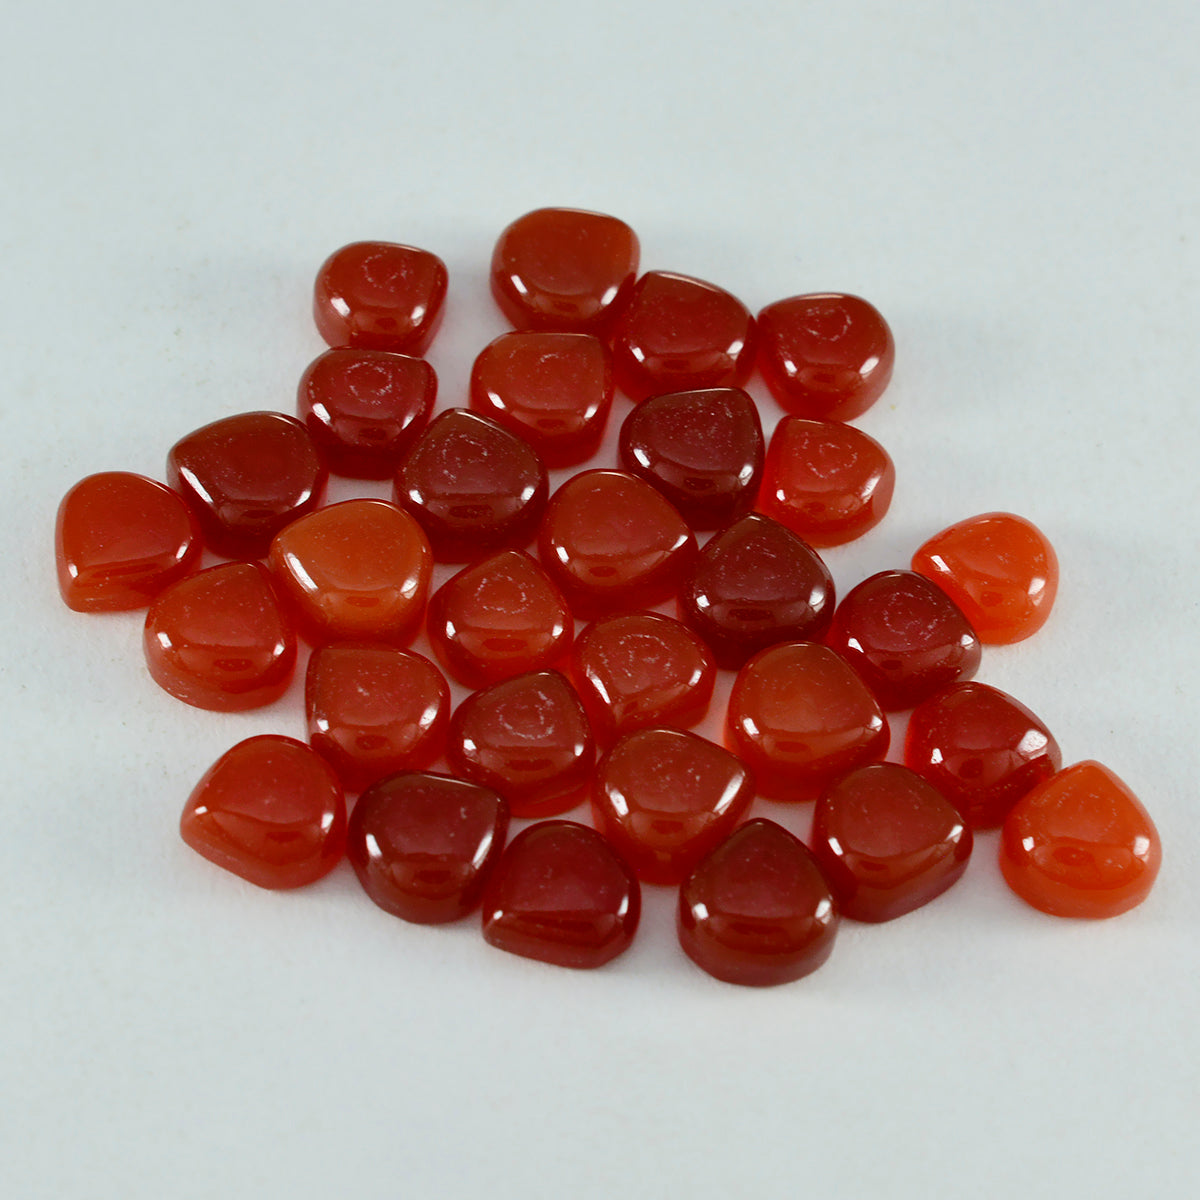 Riyogems 1PC Rode Onyx Cabochon 5x5 mm Hartvorm mooie kwaliteit losse edelsteen